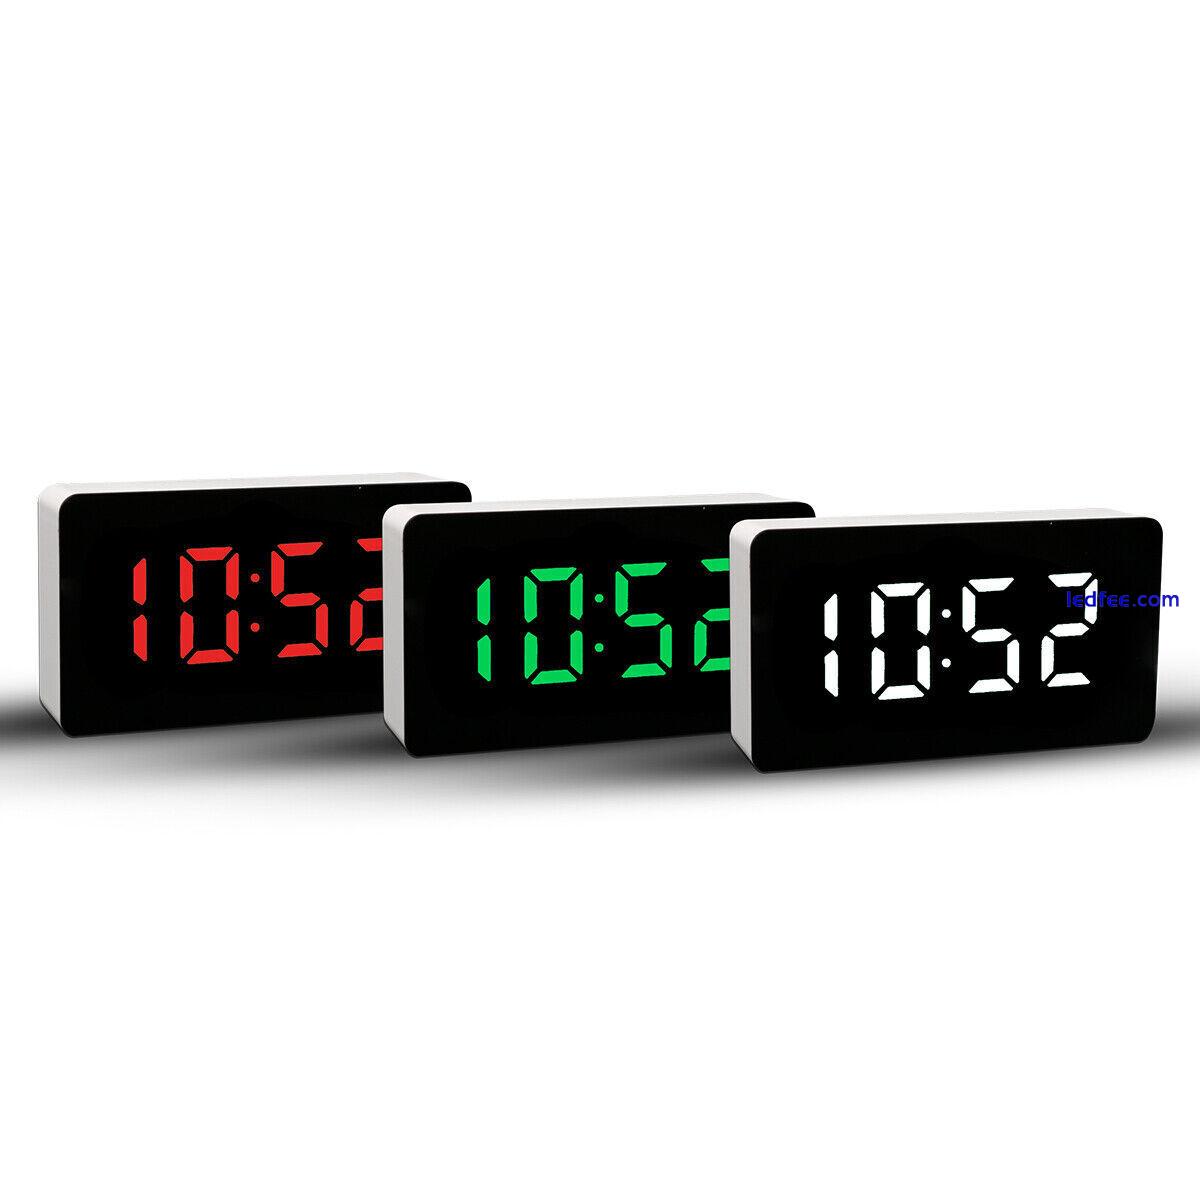 Digital Alarm Clock LED Mirror Display Temperature Date Bedside Wall Clock USB 3 